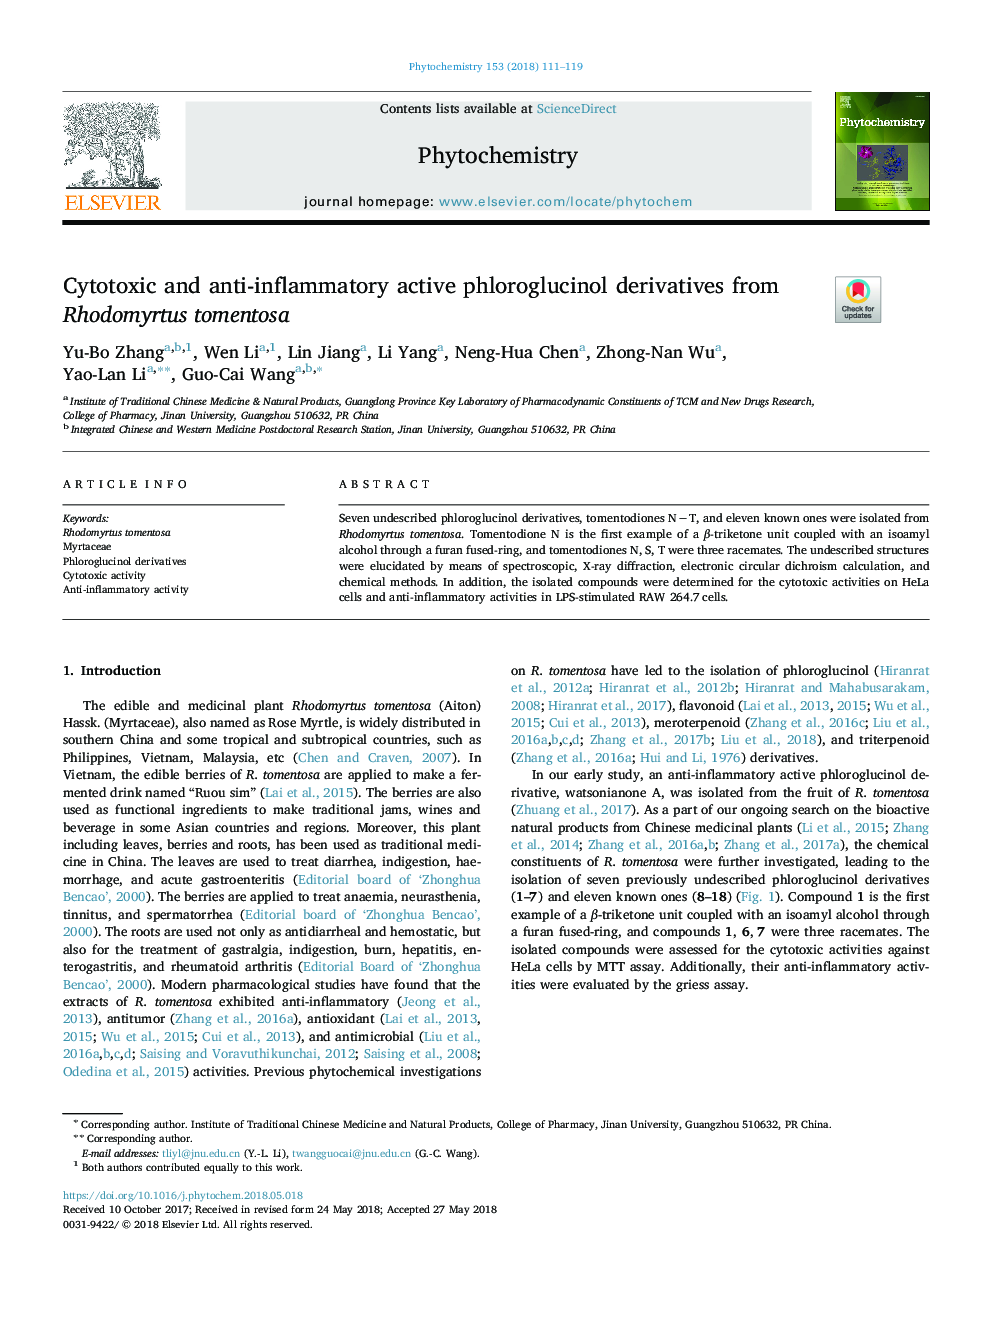 Cytotoxic and anti-inflammatory active phloroglucinol derivatives from Rhodomyrtus tomentosa